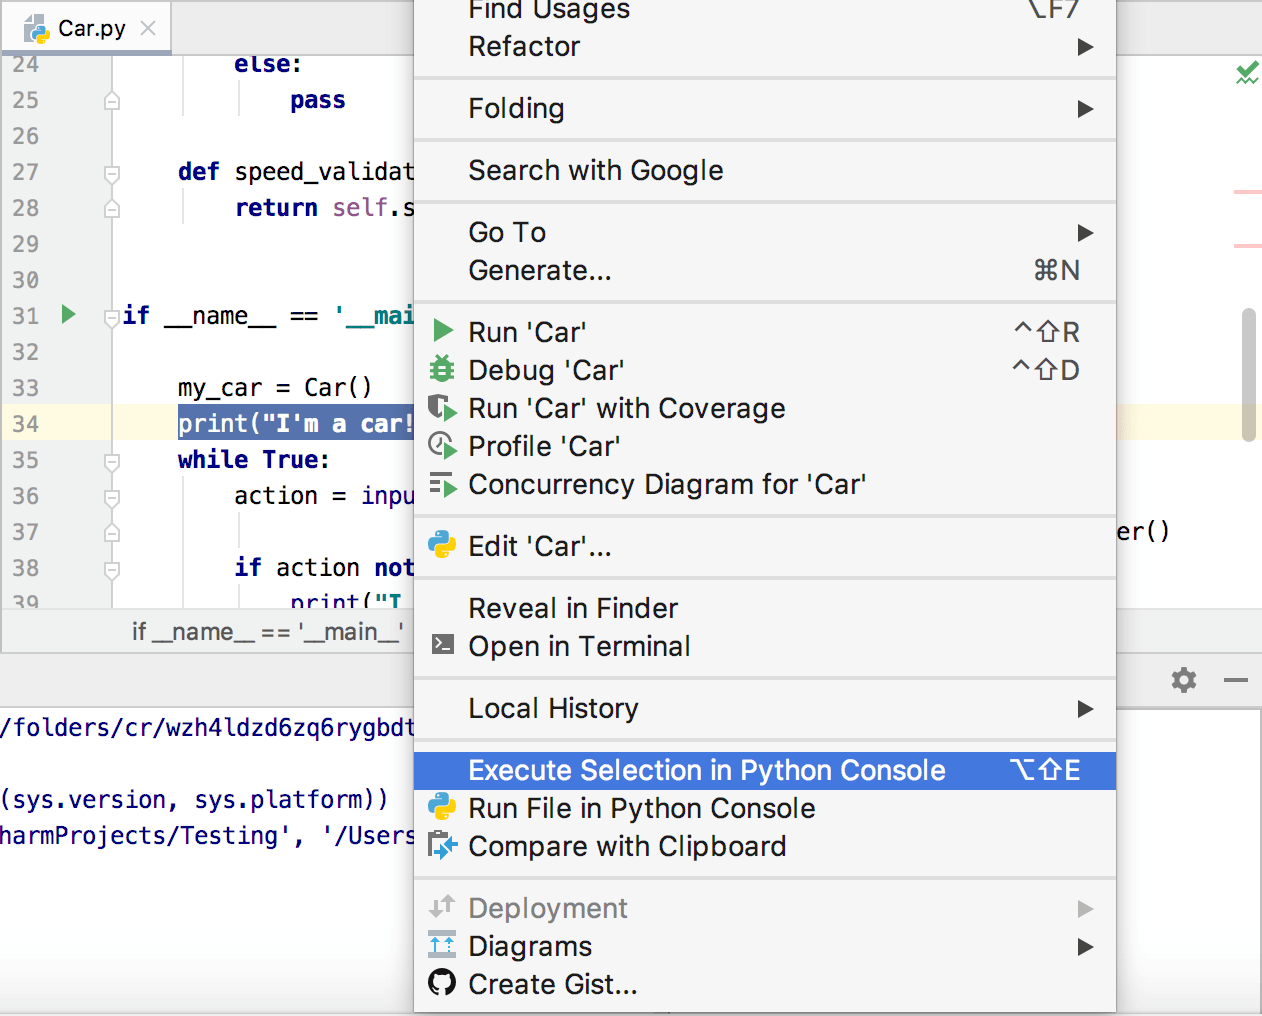 Context menu for executing the code selection